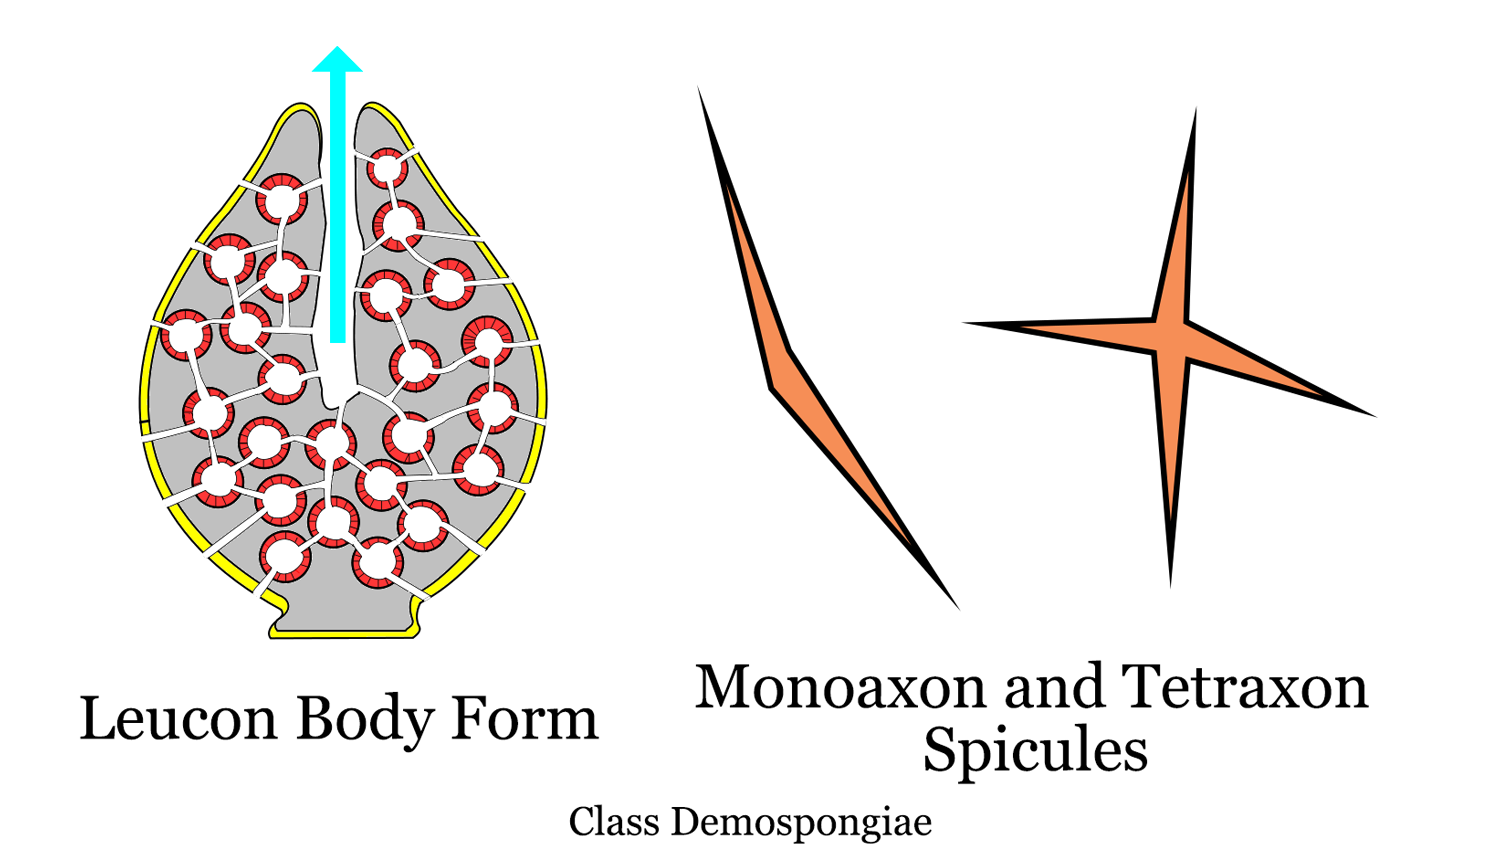 Diagram of Demospongiae body plan and spicules